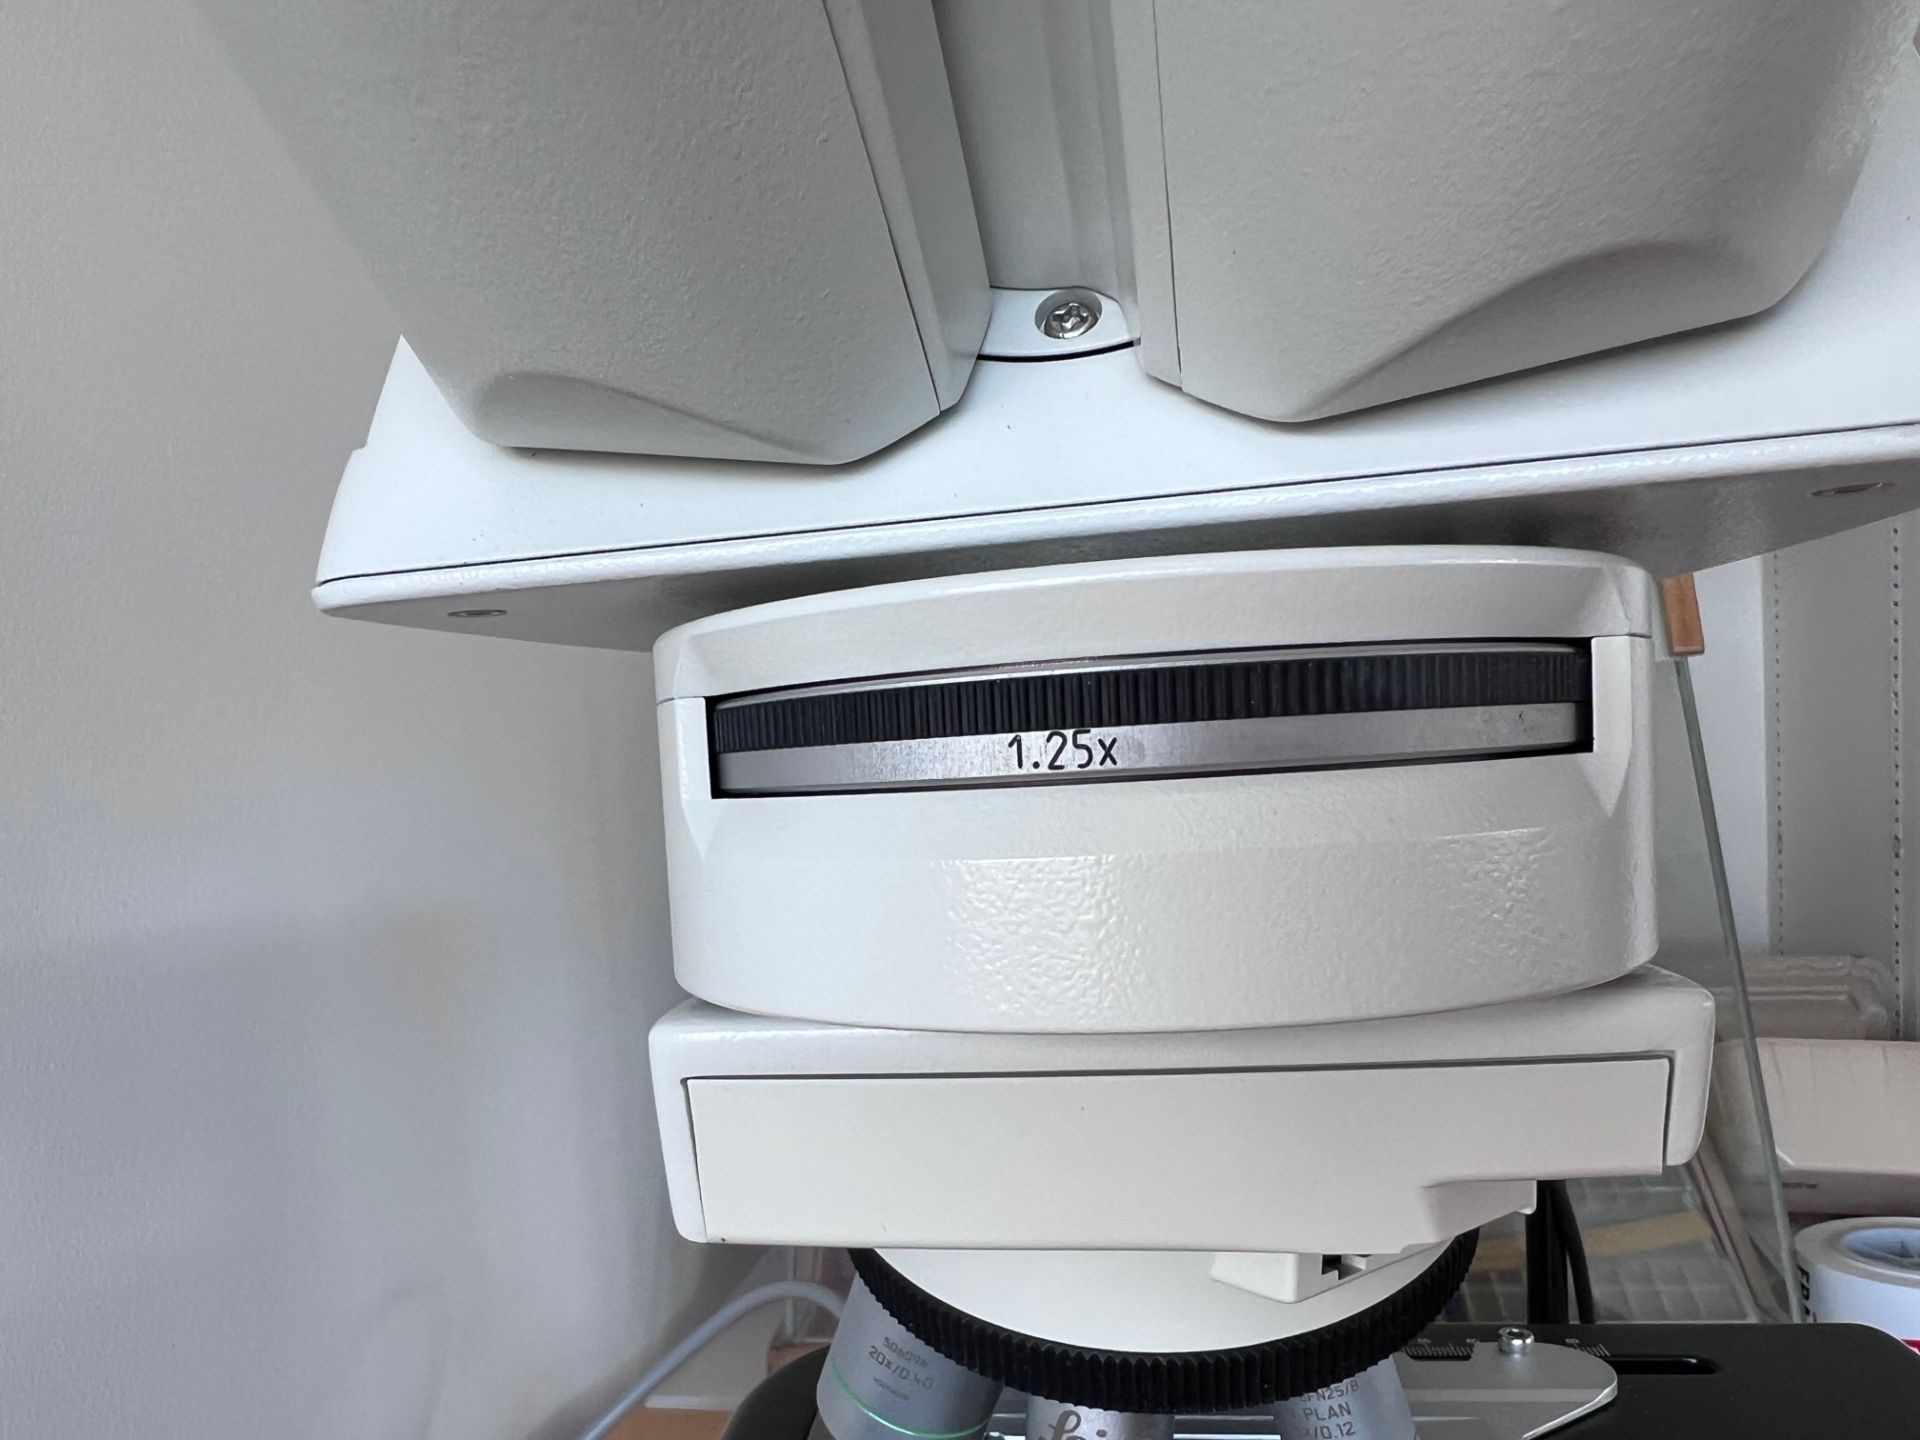 2018 Leica DM2500 LED Optical Microscope w/5 Objectives - Objectives eN Plan 5x/0.12 10x/0.25 20x/0. - Image 16 of 23